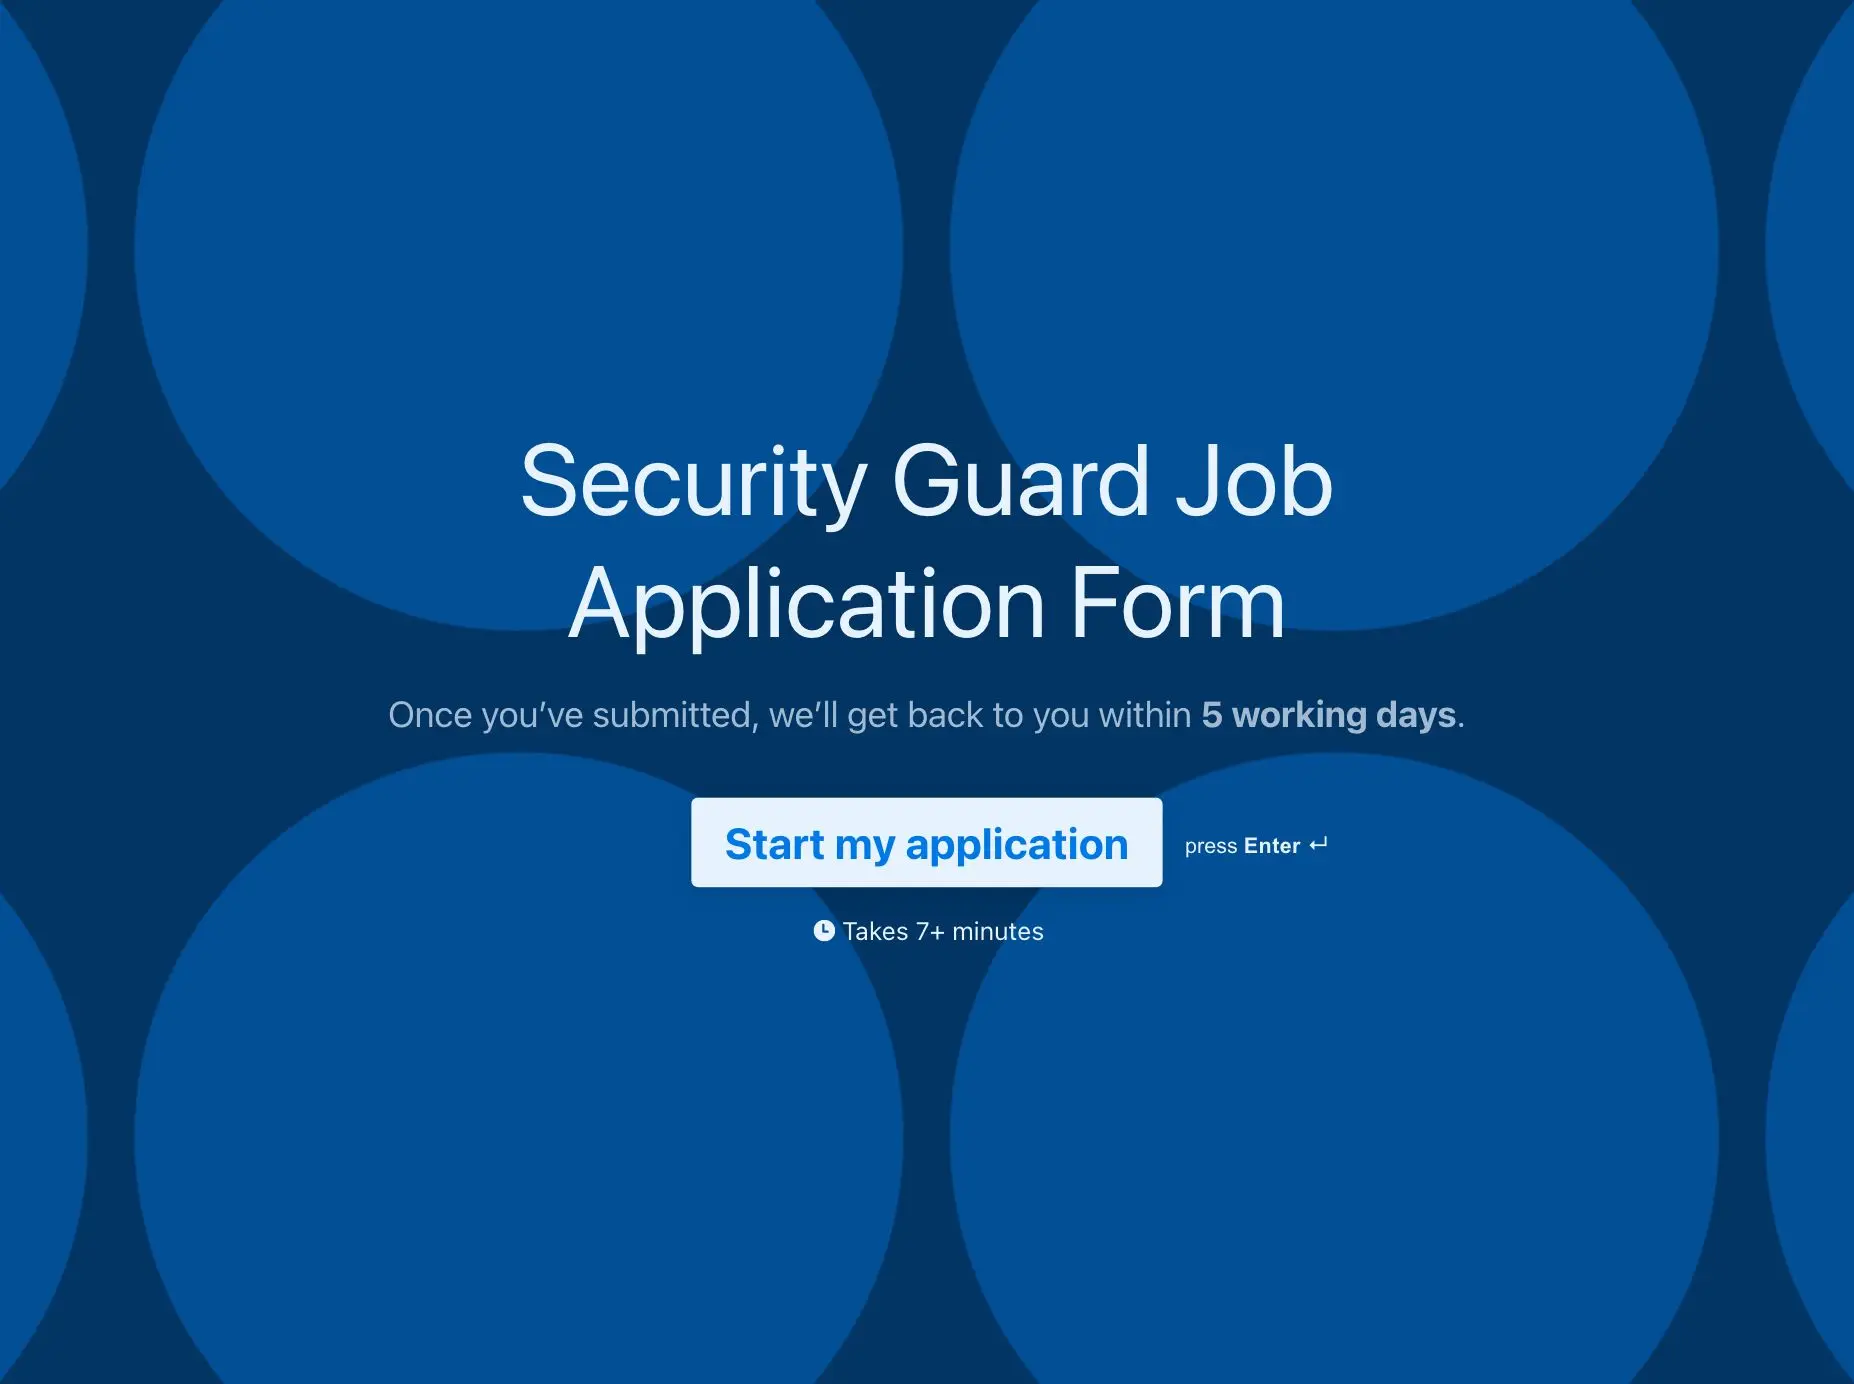 Security Guard Job Application Form Template Hero